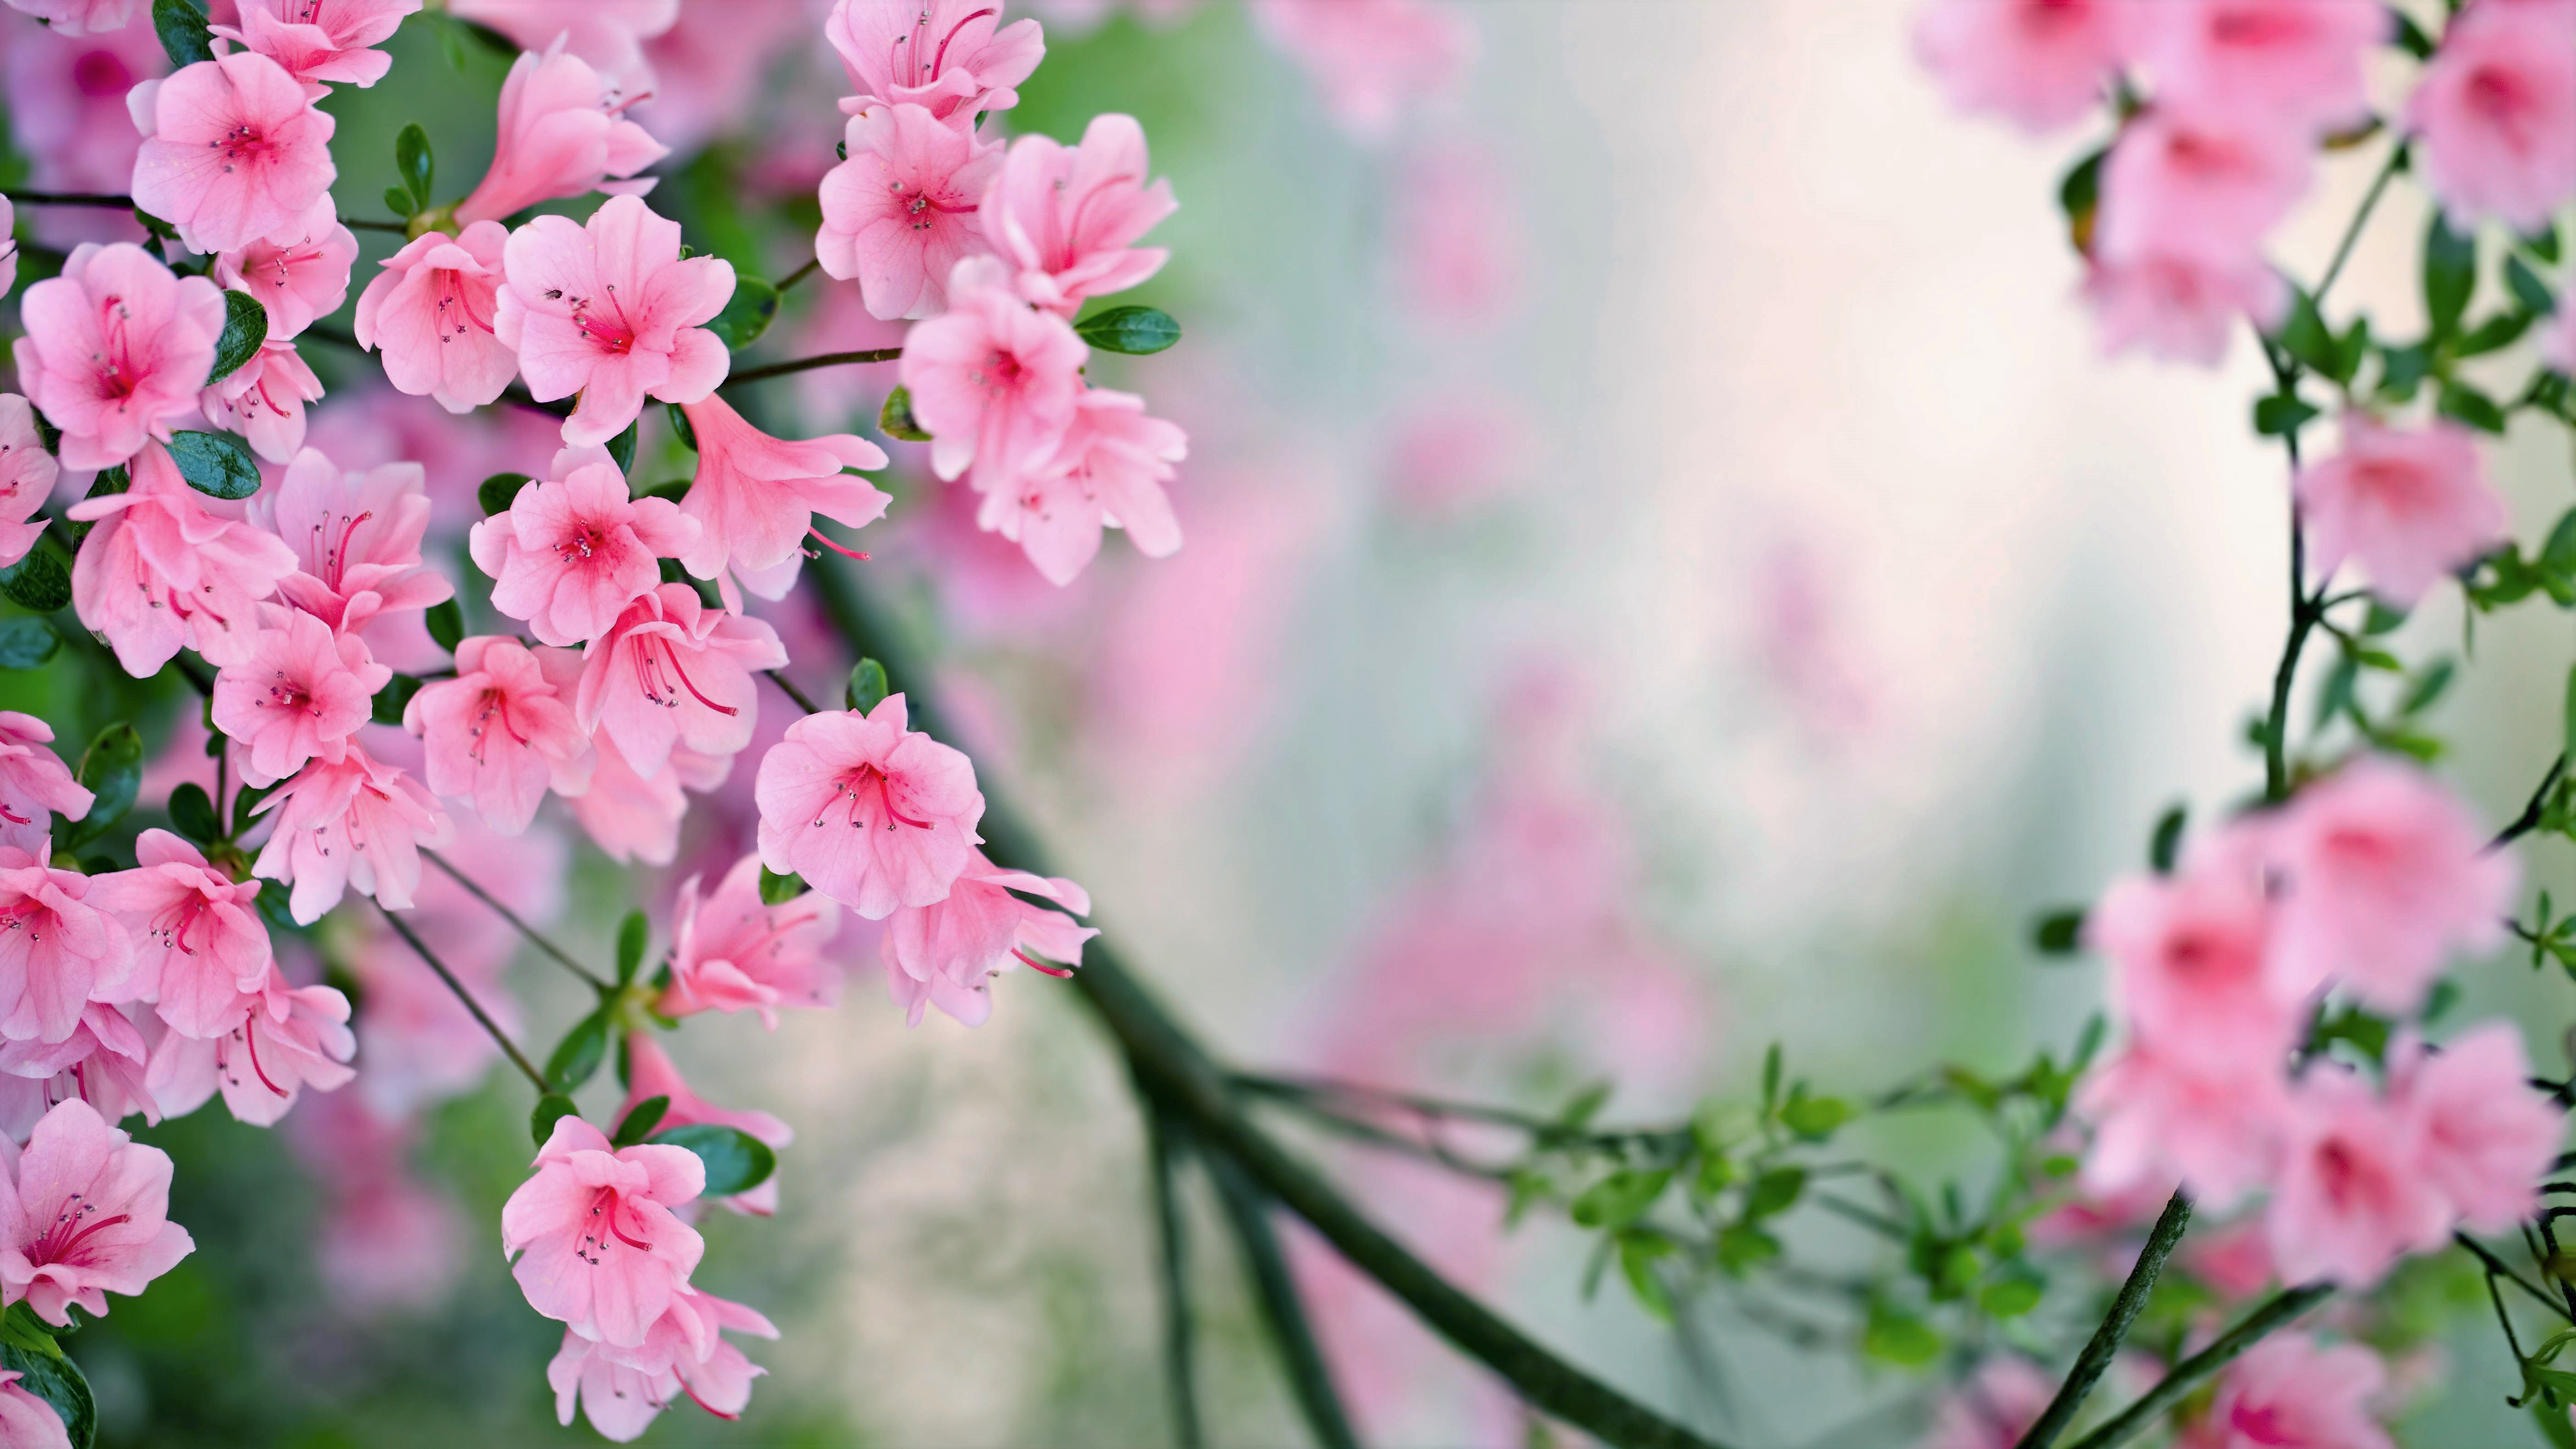 430009 descargar imagen primavera, rama, florecer, tierra/naturaleza, flor, flor rosa, flores: fondos de pantalla y protectores de pantalla gratis